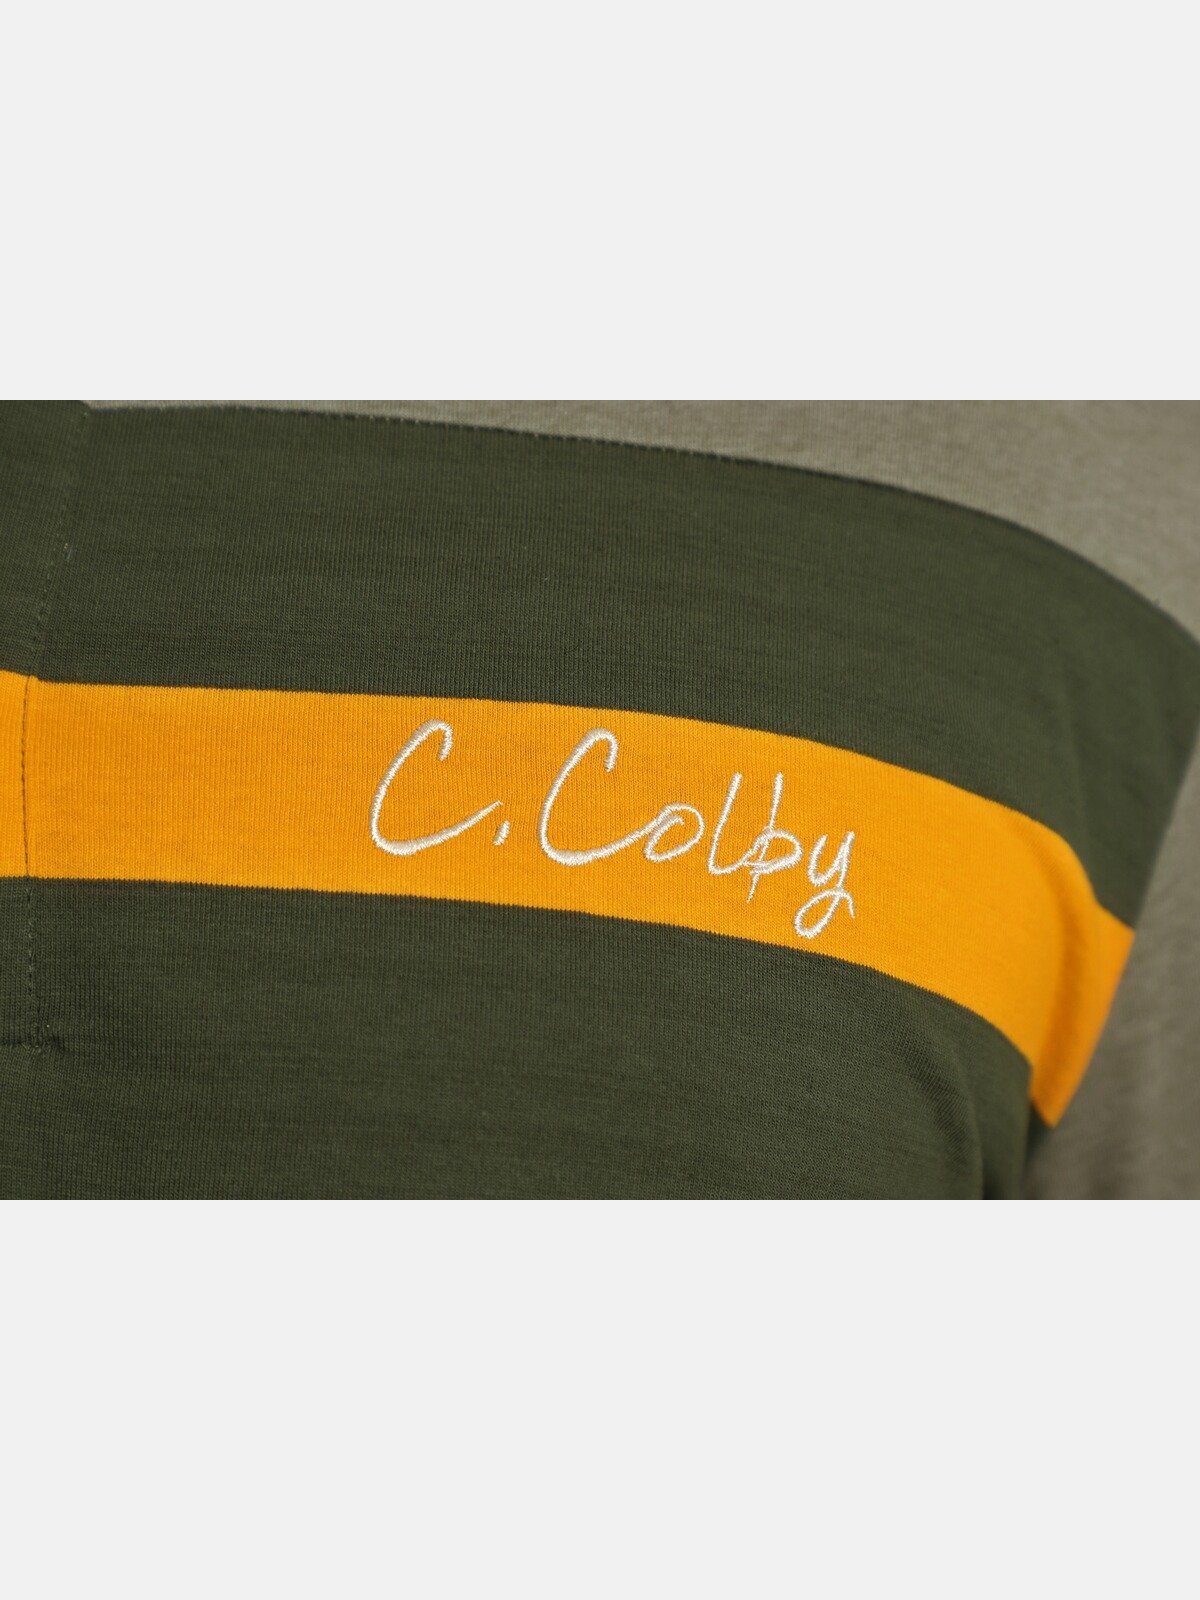 in Charles Sweatshirt Colby stylisch Colour-Blocking GARWY EARL